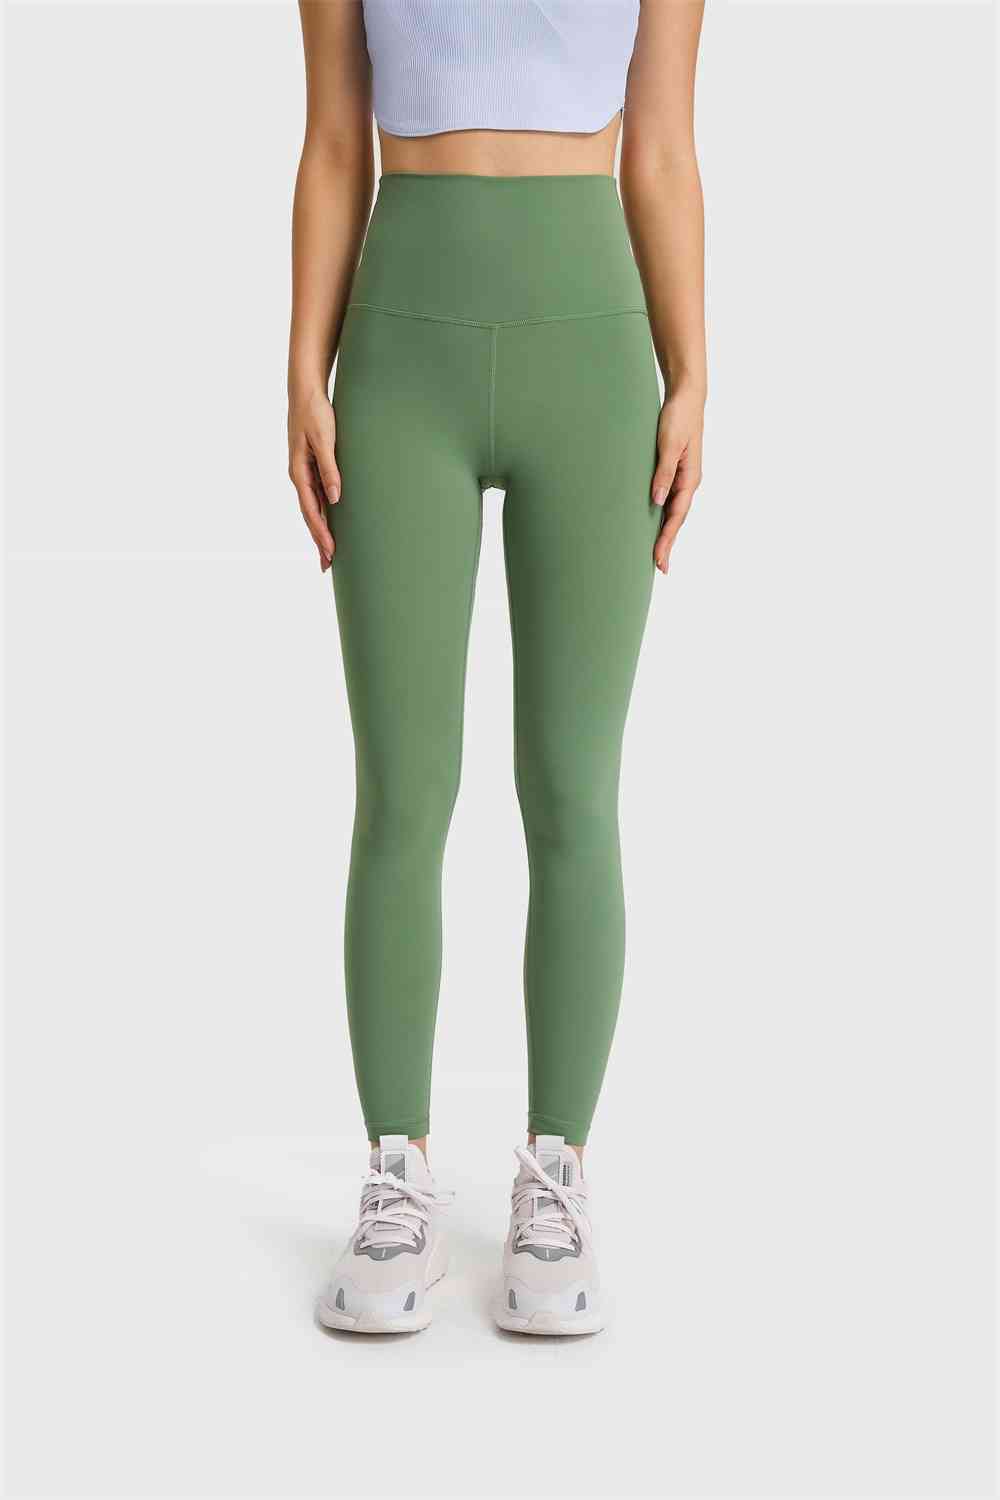 Olive green cross waist yoga leggings  Green high waist yoga pants –  Moonah Wear